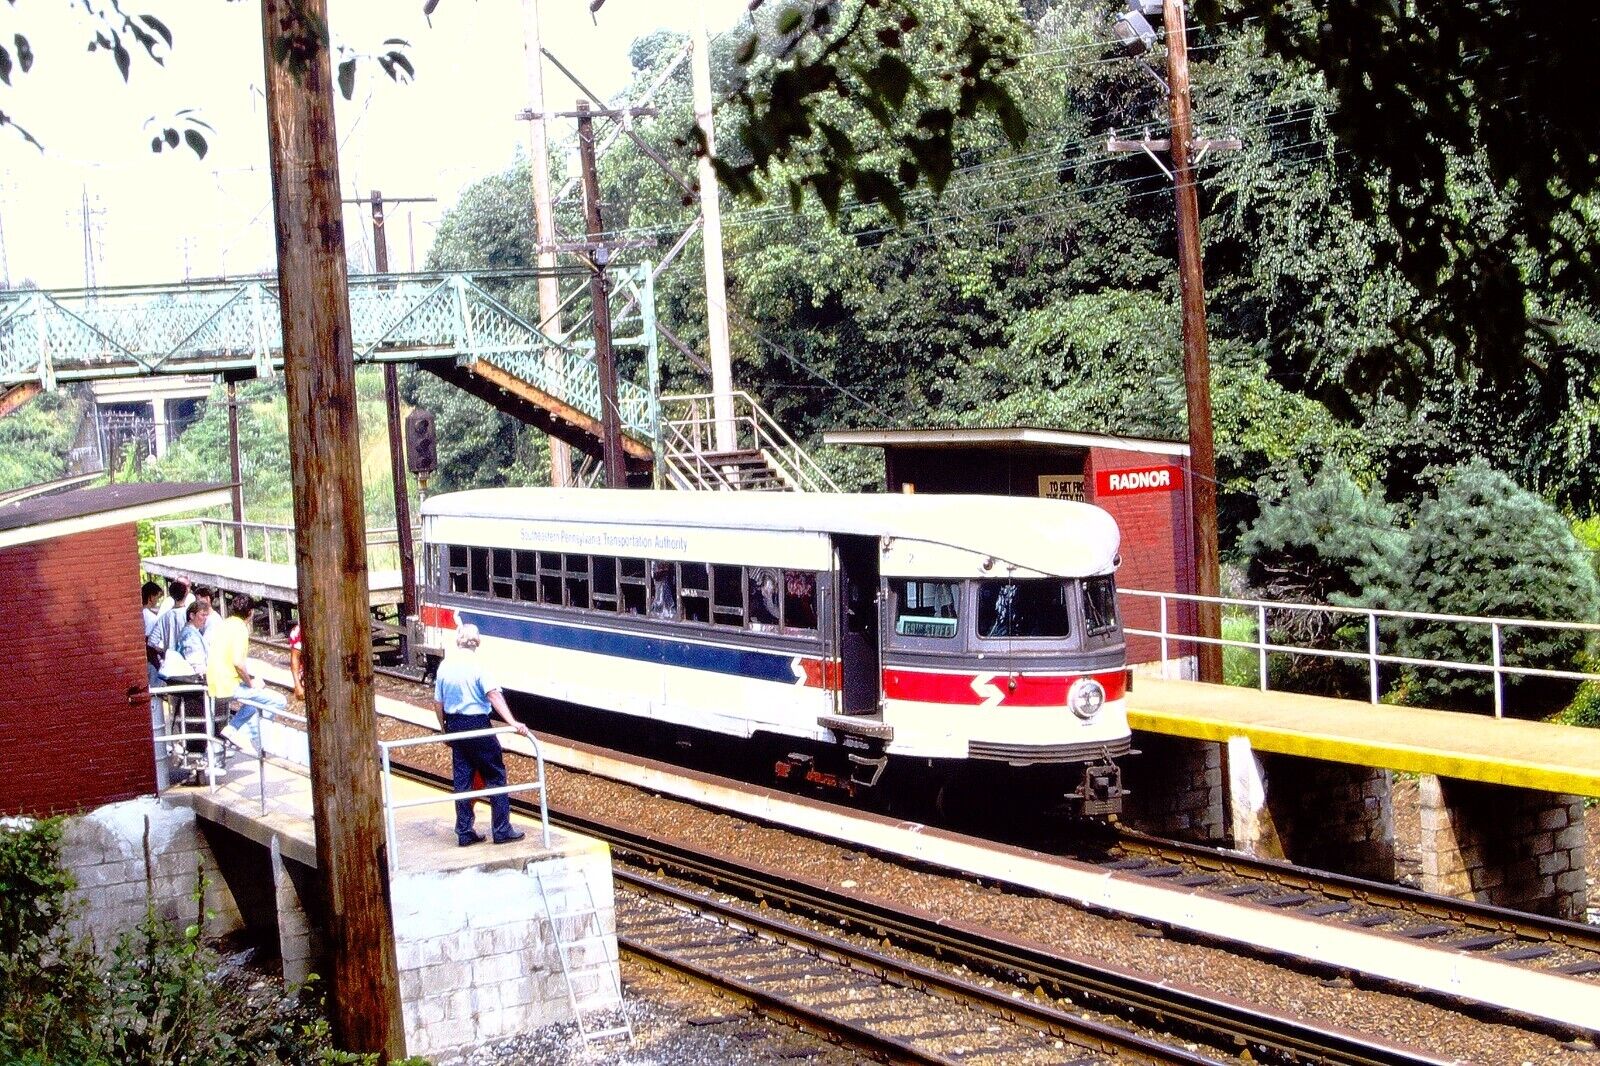 Vintage 35mm Railway Slide Train No. 209 at Radnor Station Philadelphia (88)